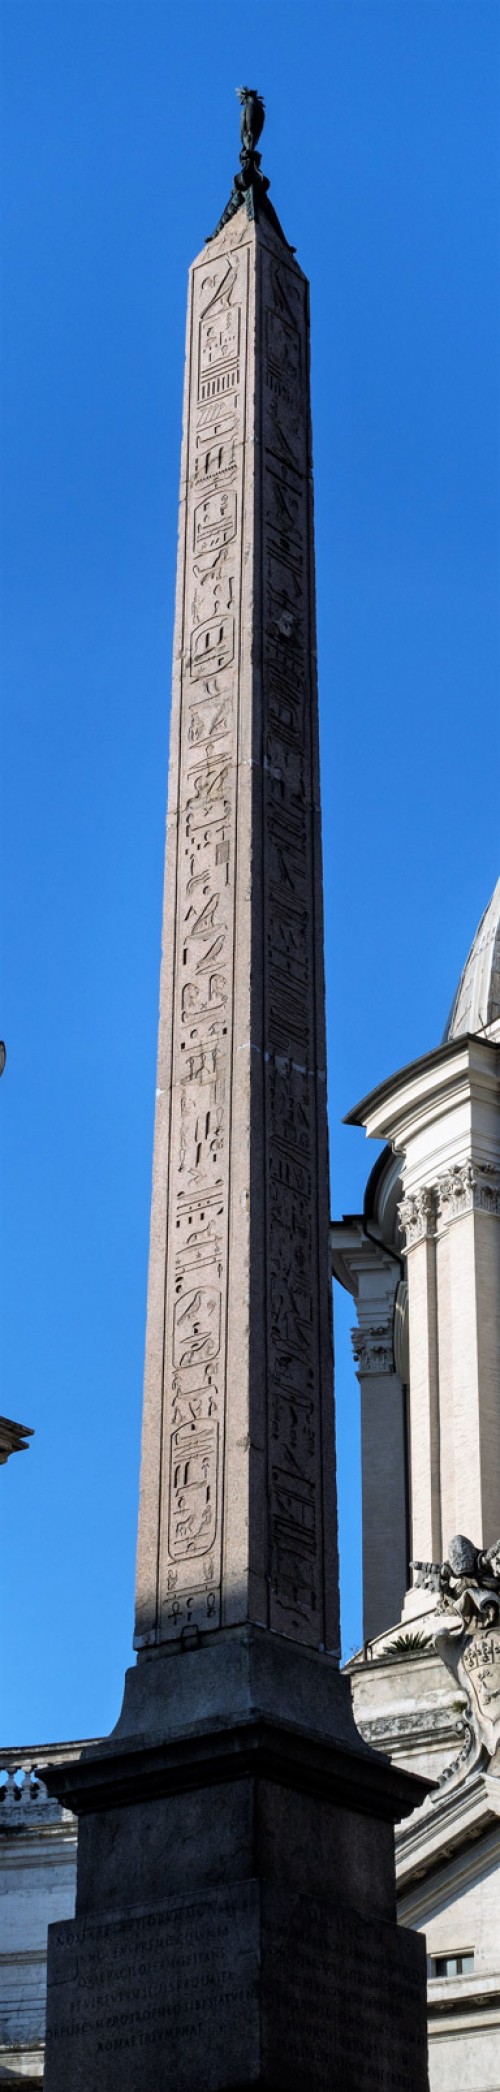 The Agonalis Obelisk topping off the Fontana dei Quattro Fiumi